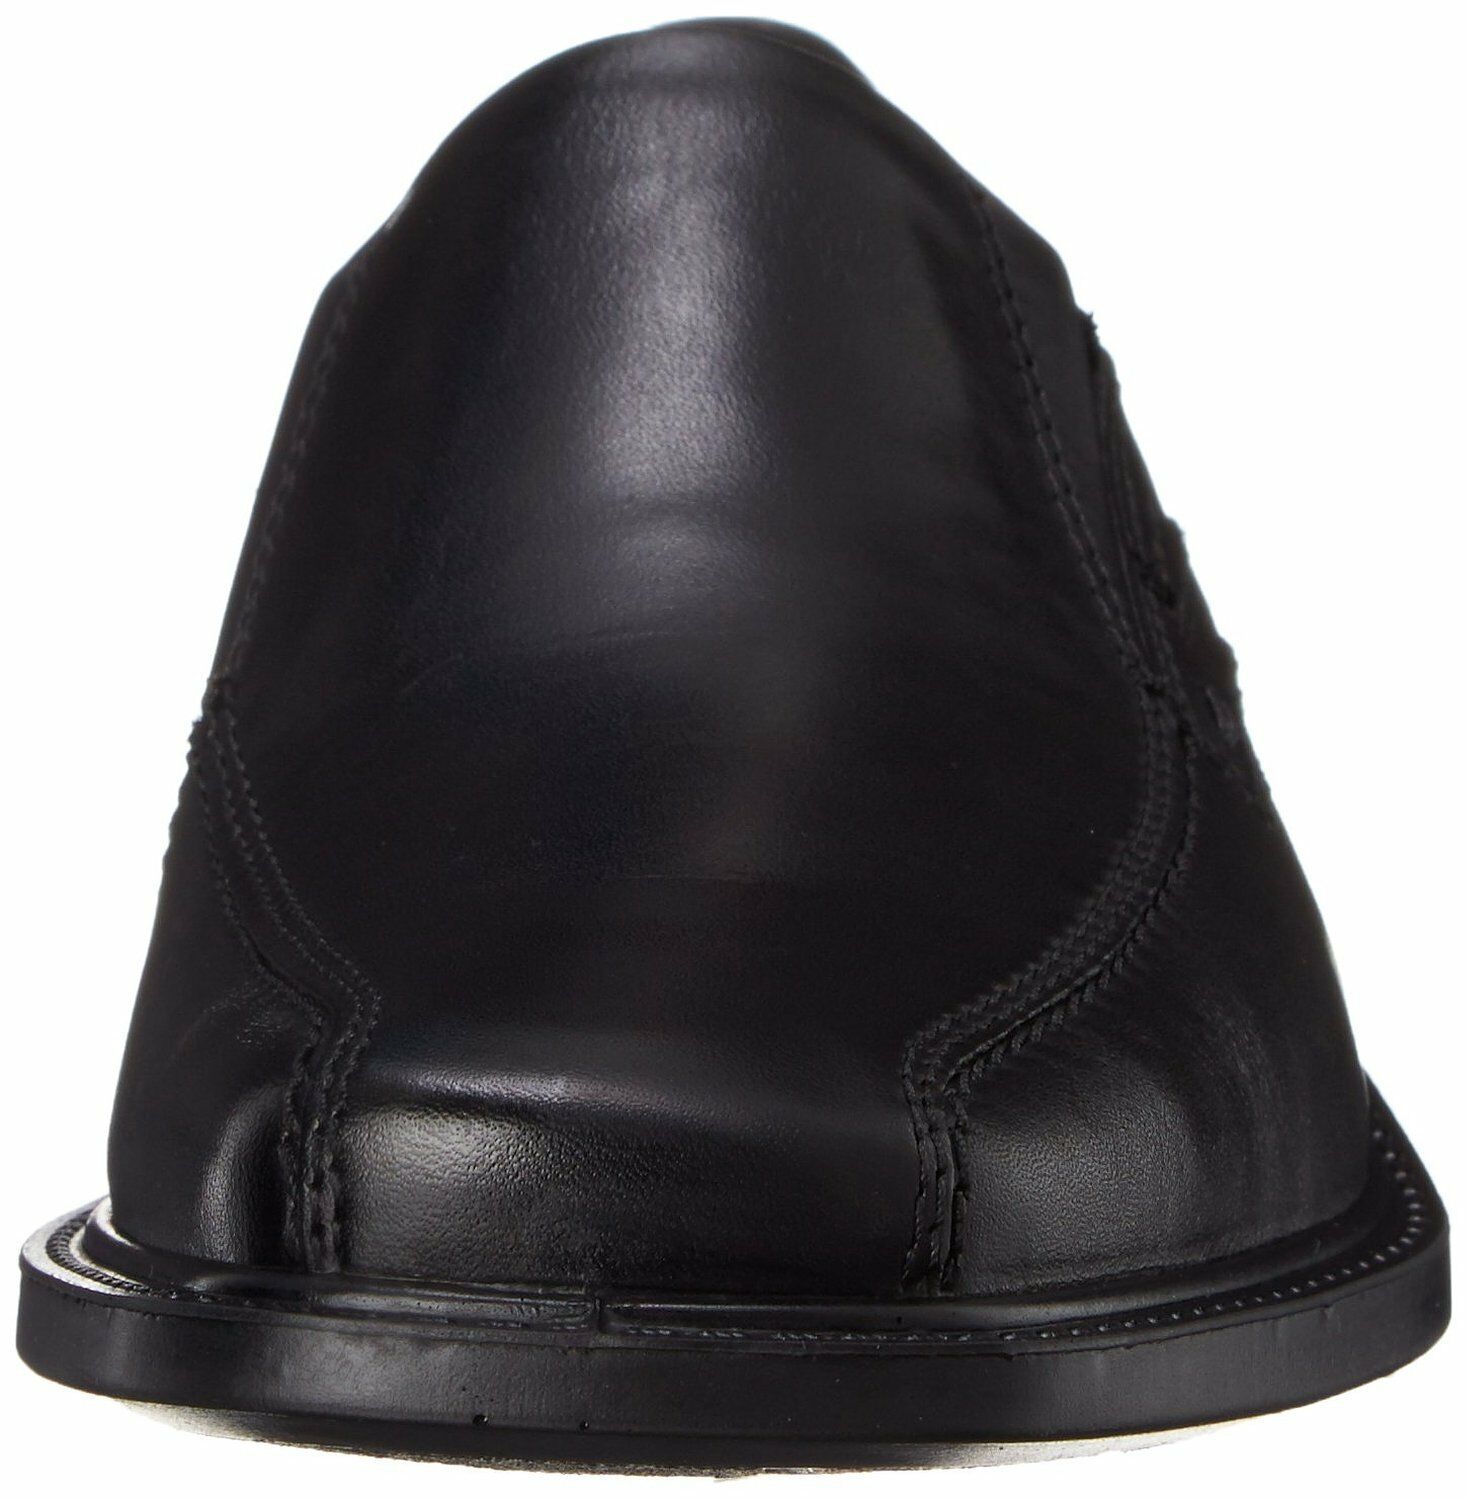 Ecco Men's 51504 New Jersey Black Leather Slip On Loafer